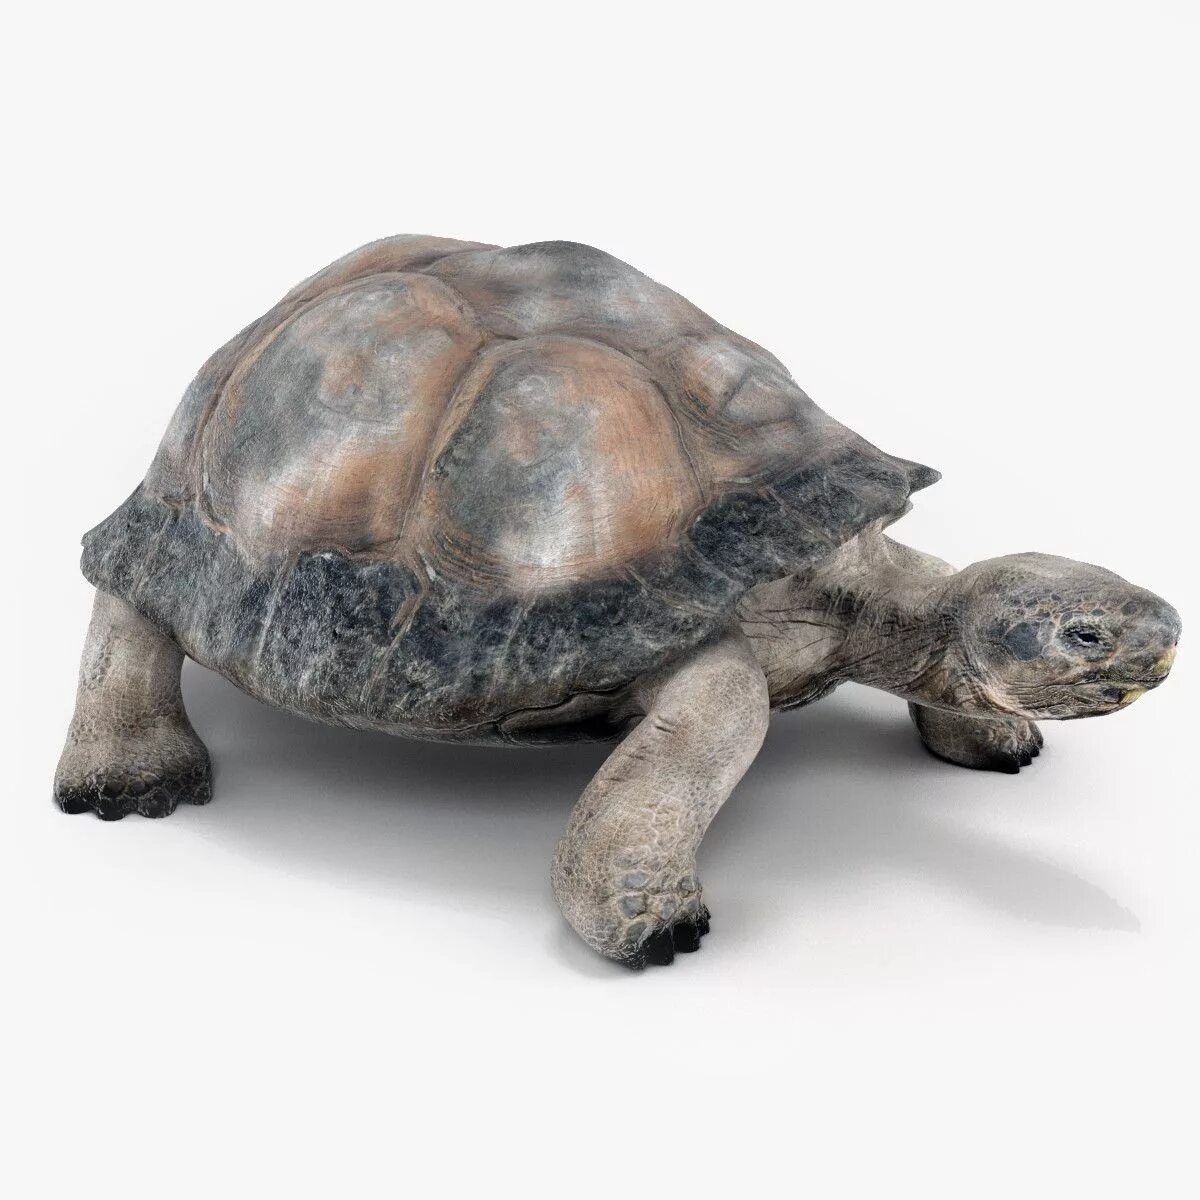 Черепаха 3д. Игрушка Tortoise 3d черепаха. Черепаха на белом фоне. Черепаха модель. Черепашки 3д.